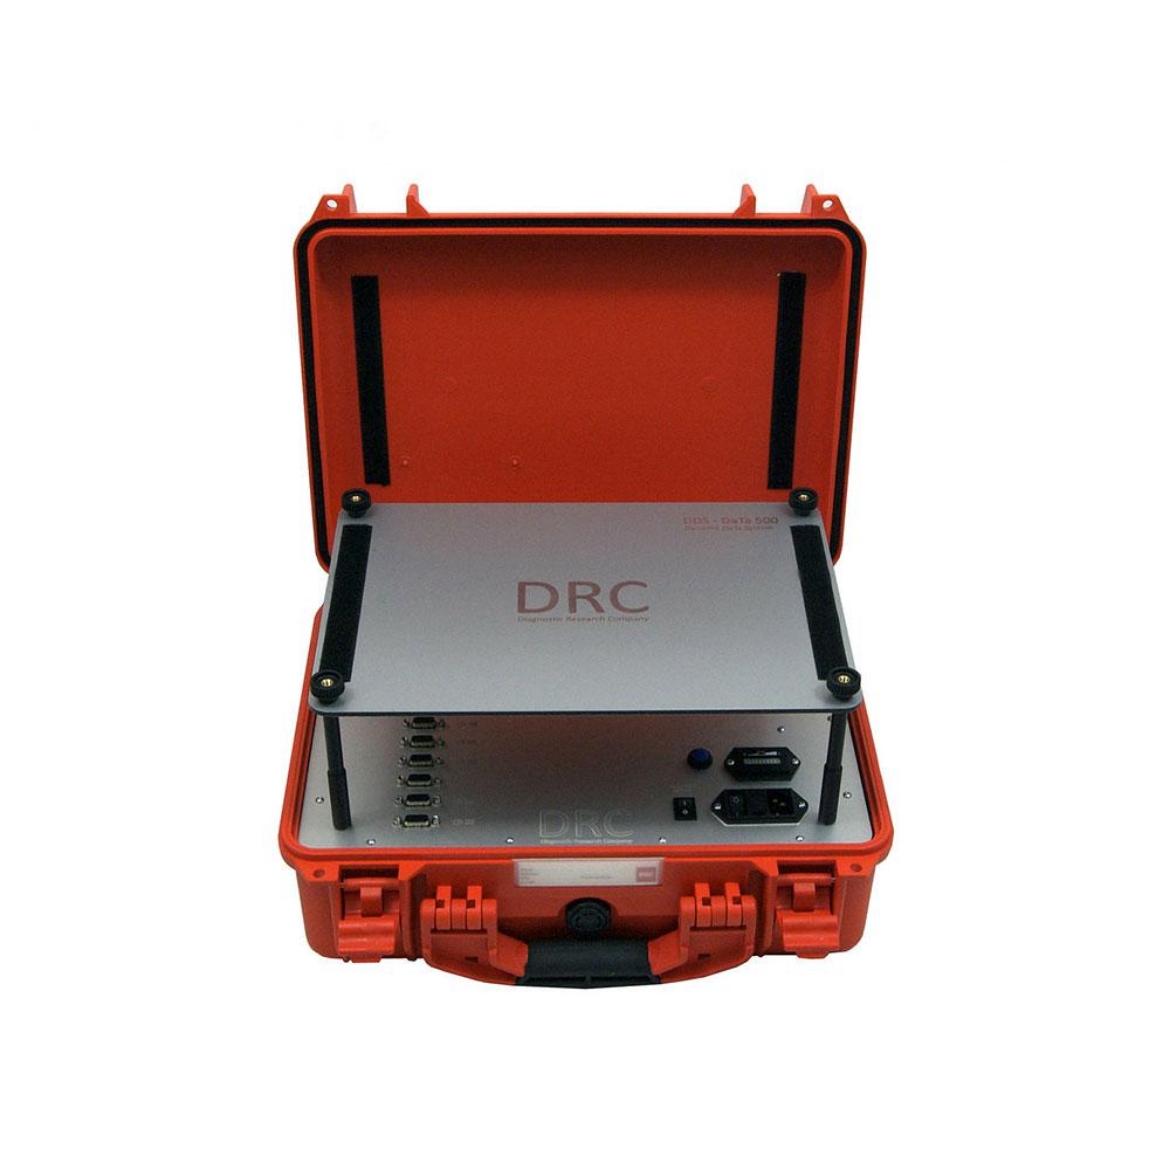 DRC DaTa 500 Acquisition Sistem resmi